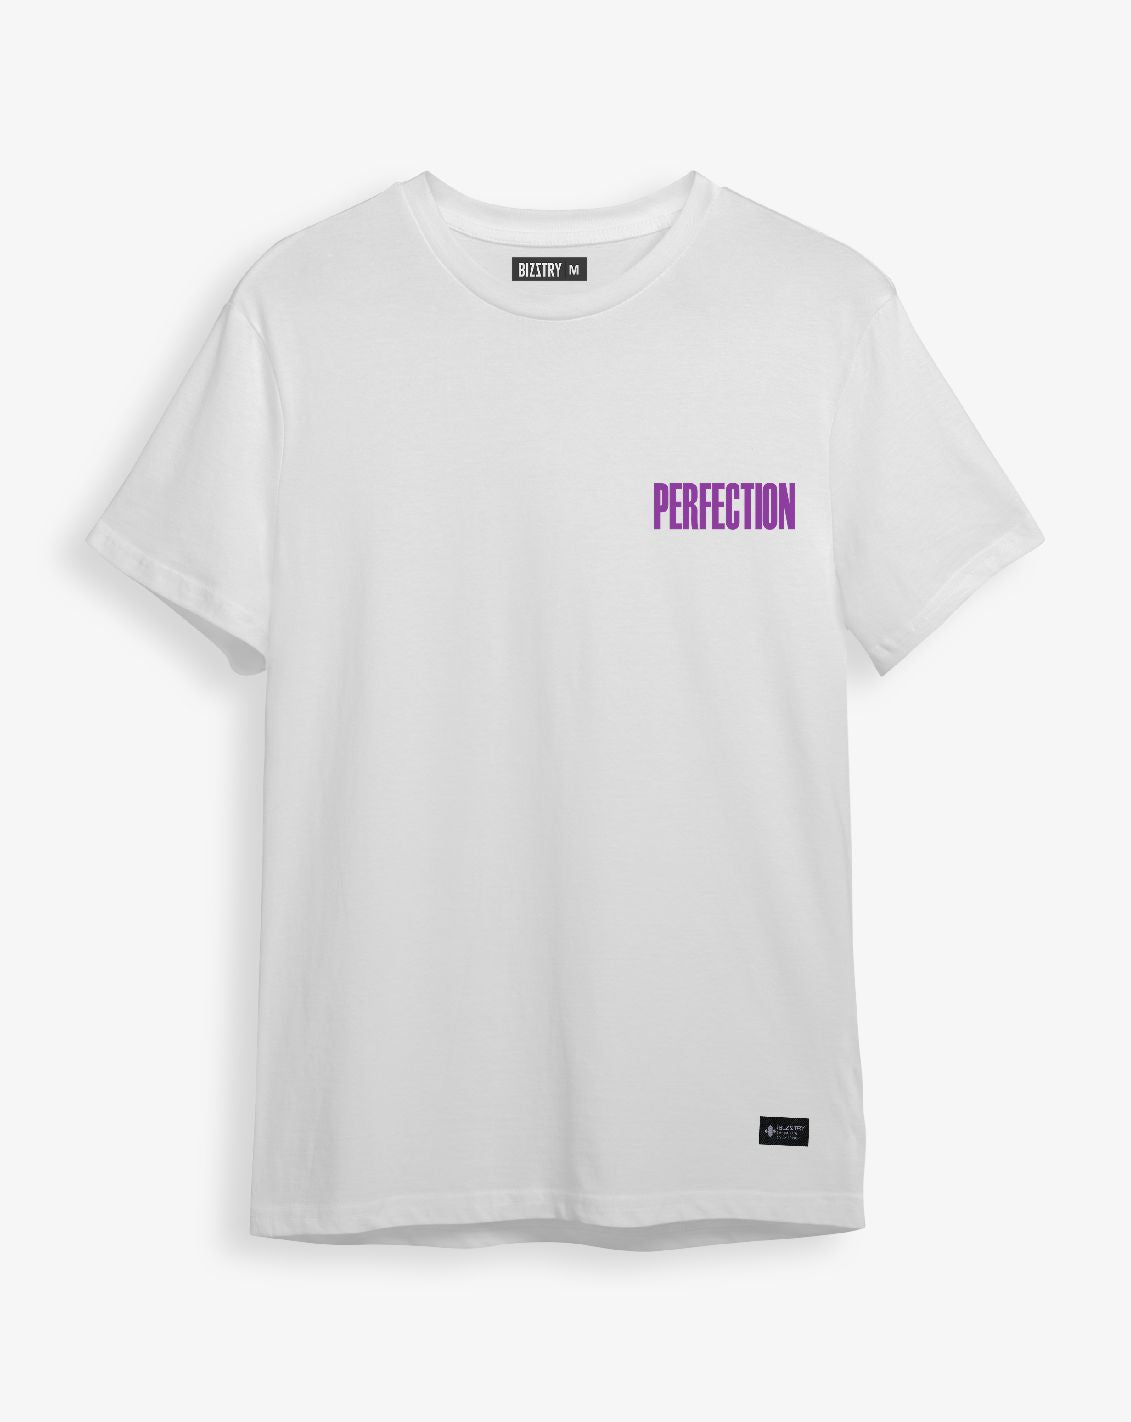 Camiseta blanco unisex PERFECTION